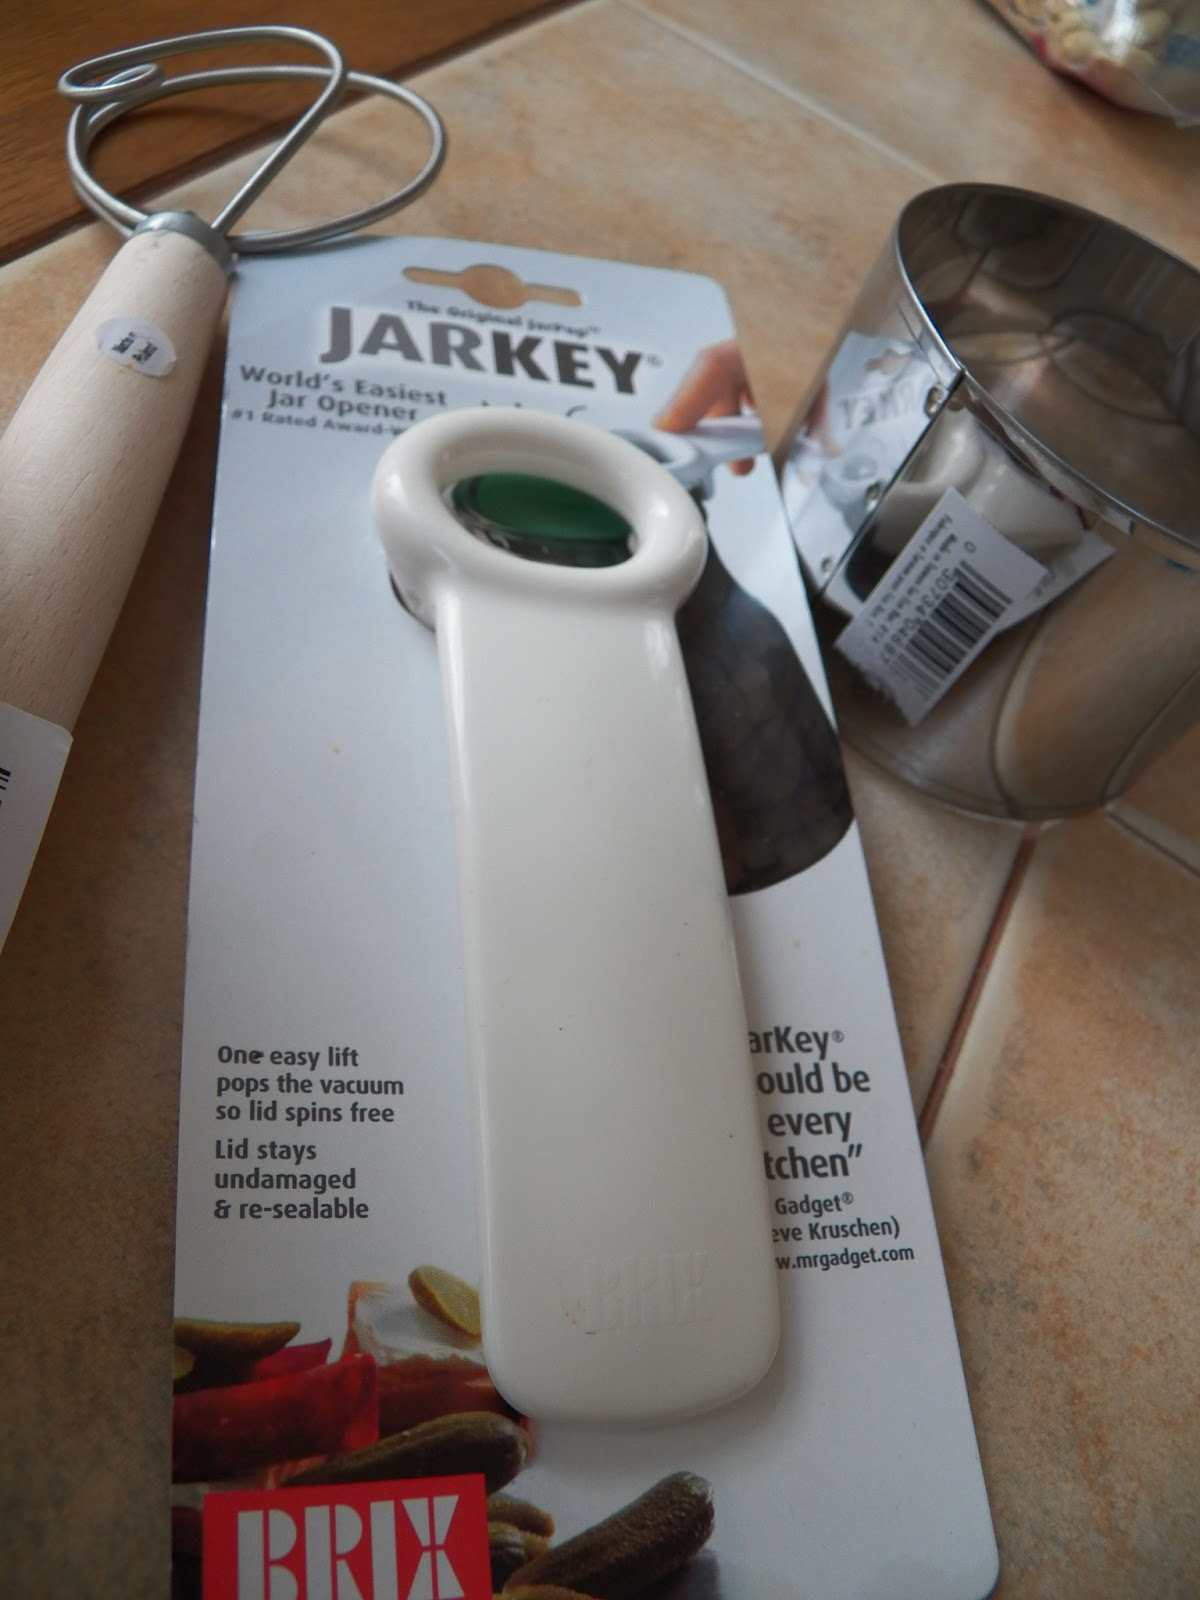 The Original JarKey by Brix - Worlds Easiest Jar Opener for sale online